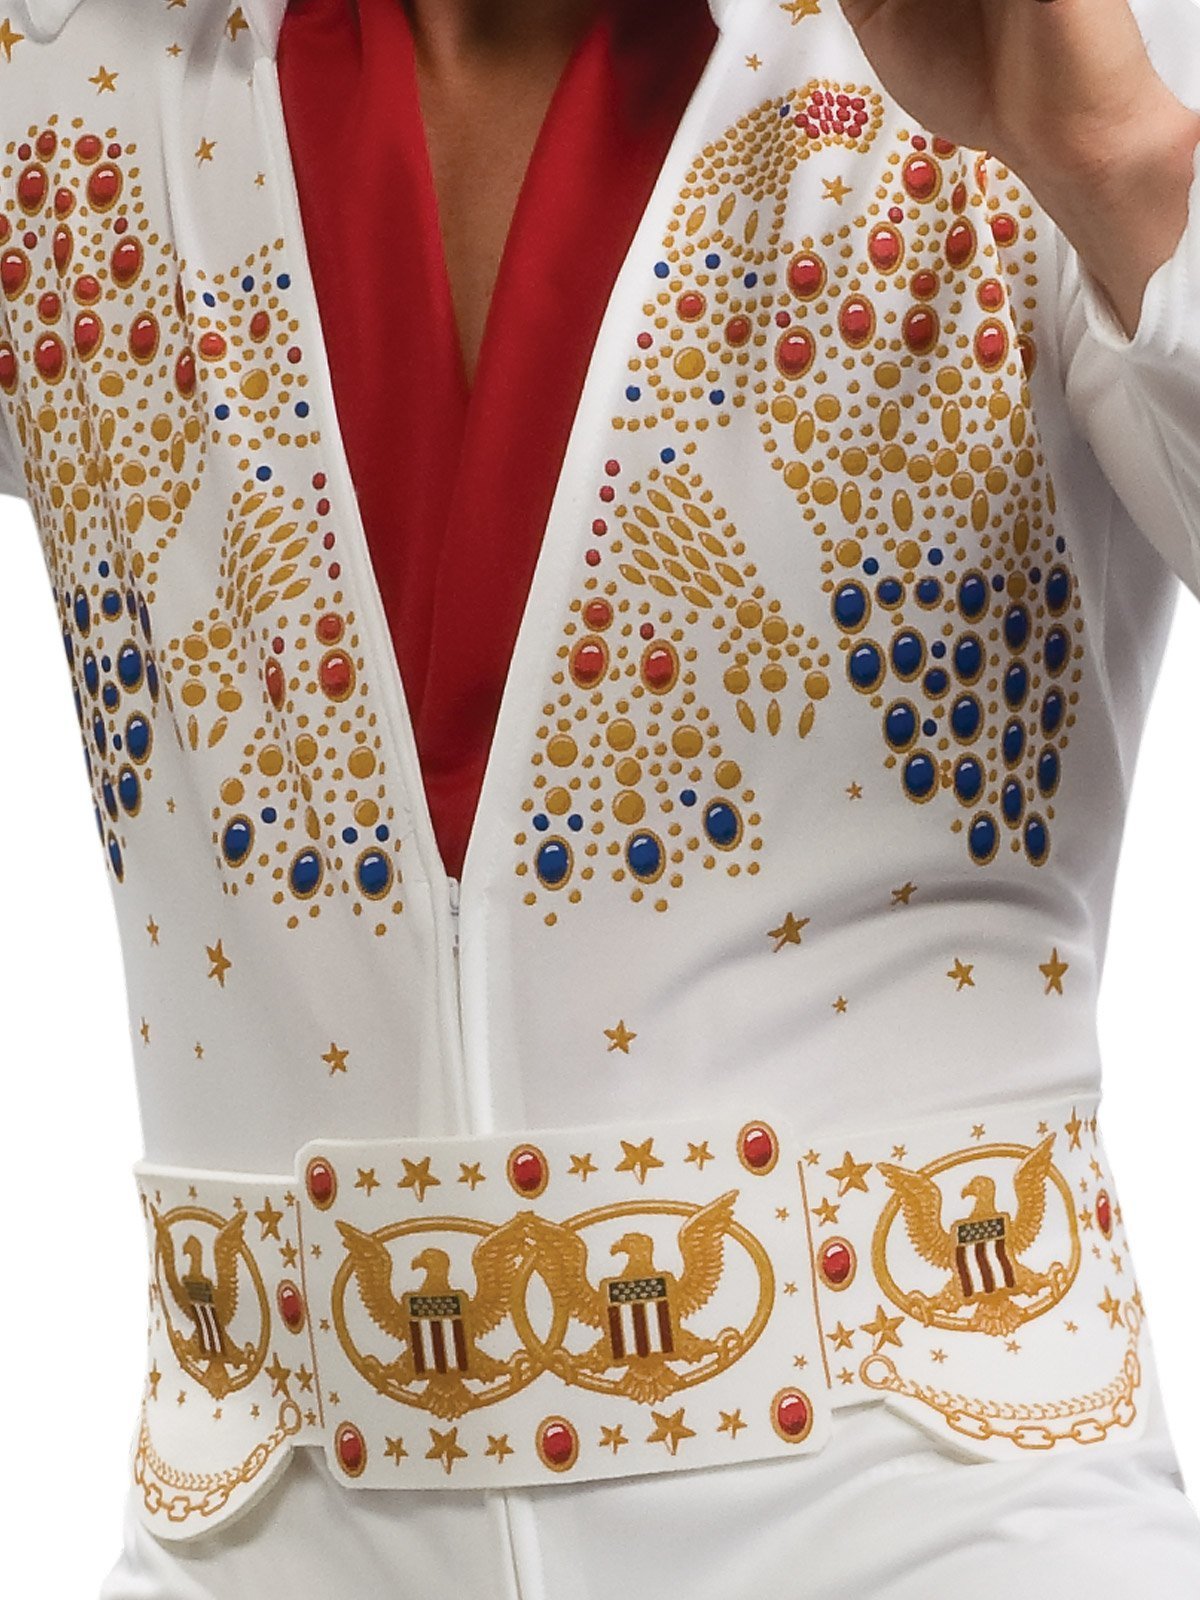 Stage-worn Elvis jumpsuit gets top billing at GWS Sept. 4 auction